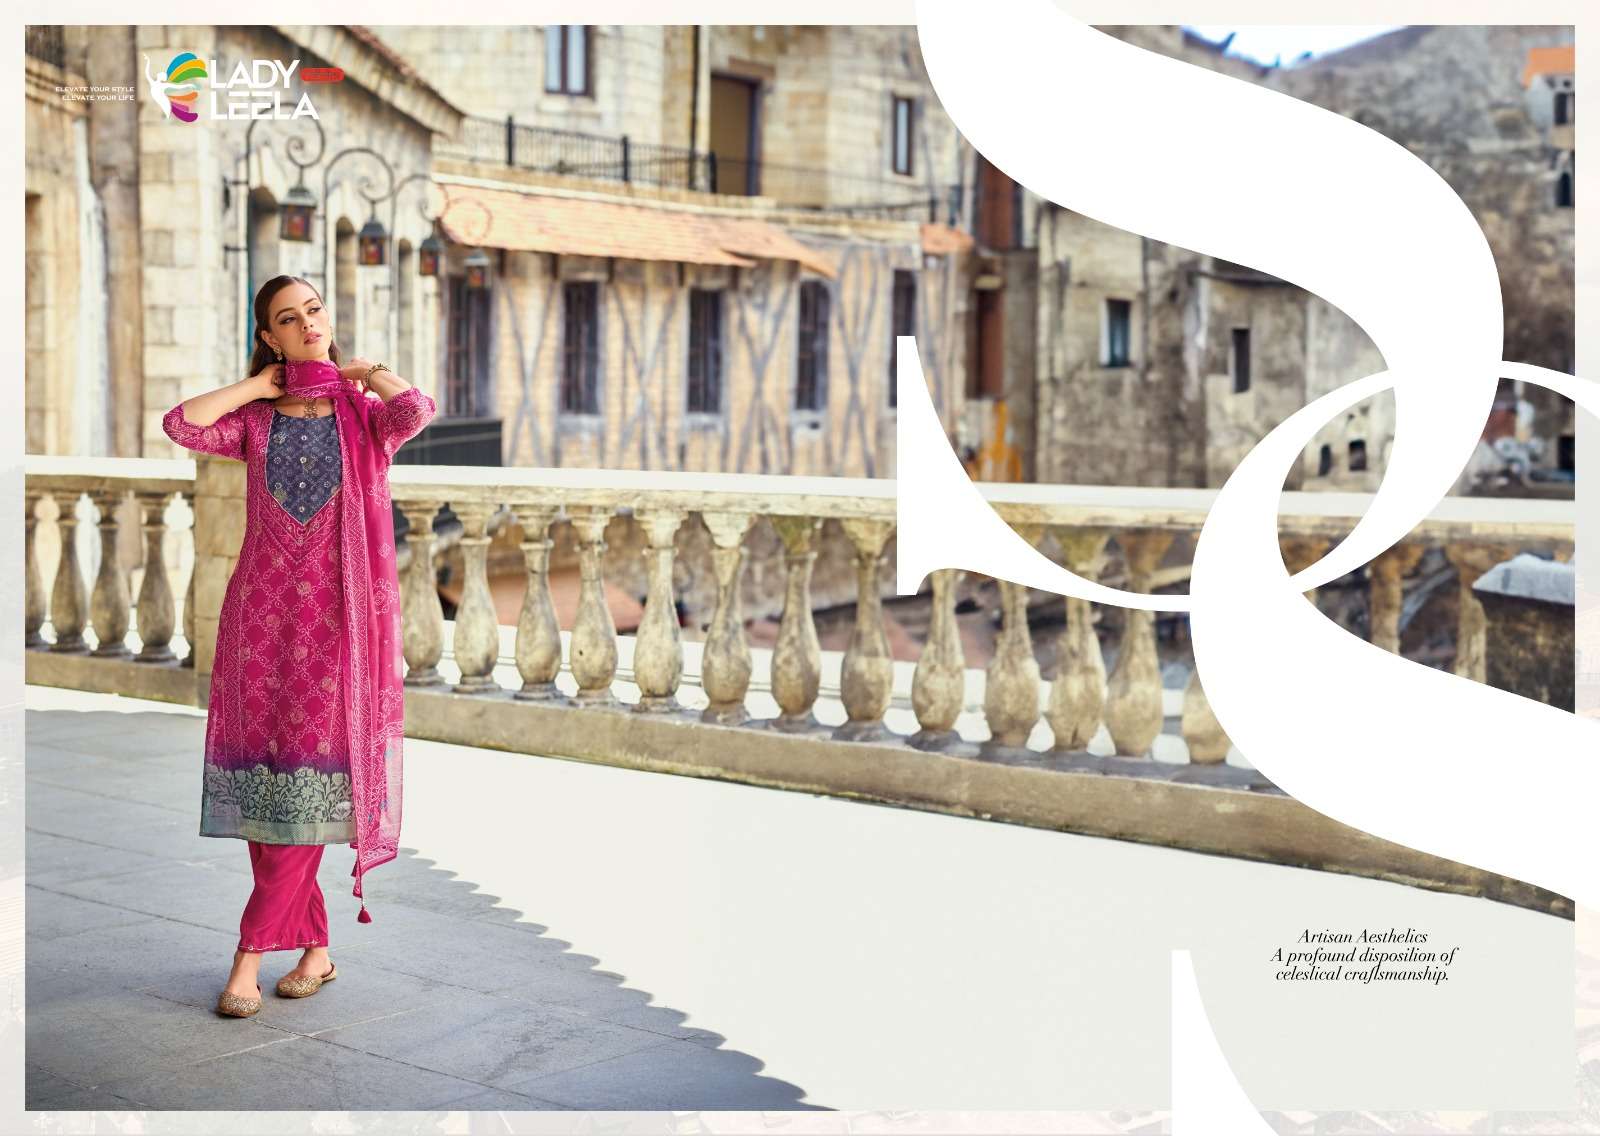 lady leela hinaaz 1001-1004 series ready-to-wear salwar kameez wholesale price surat